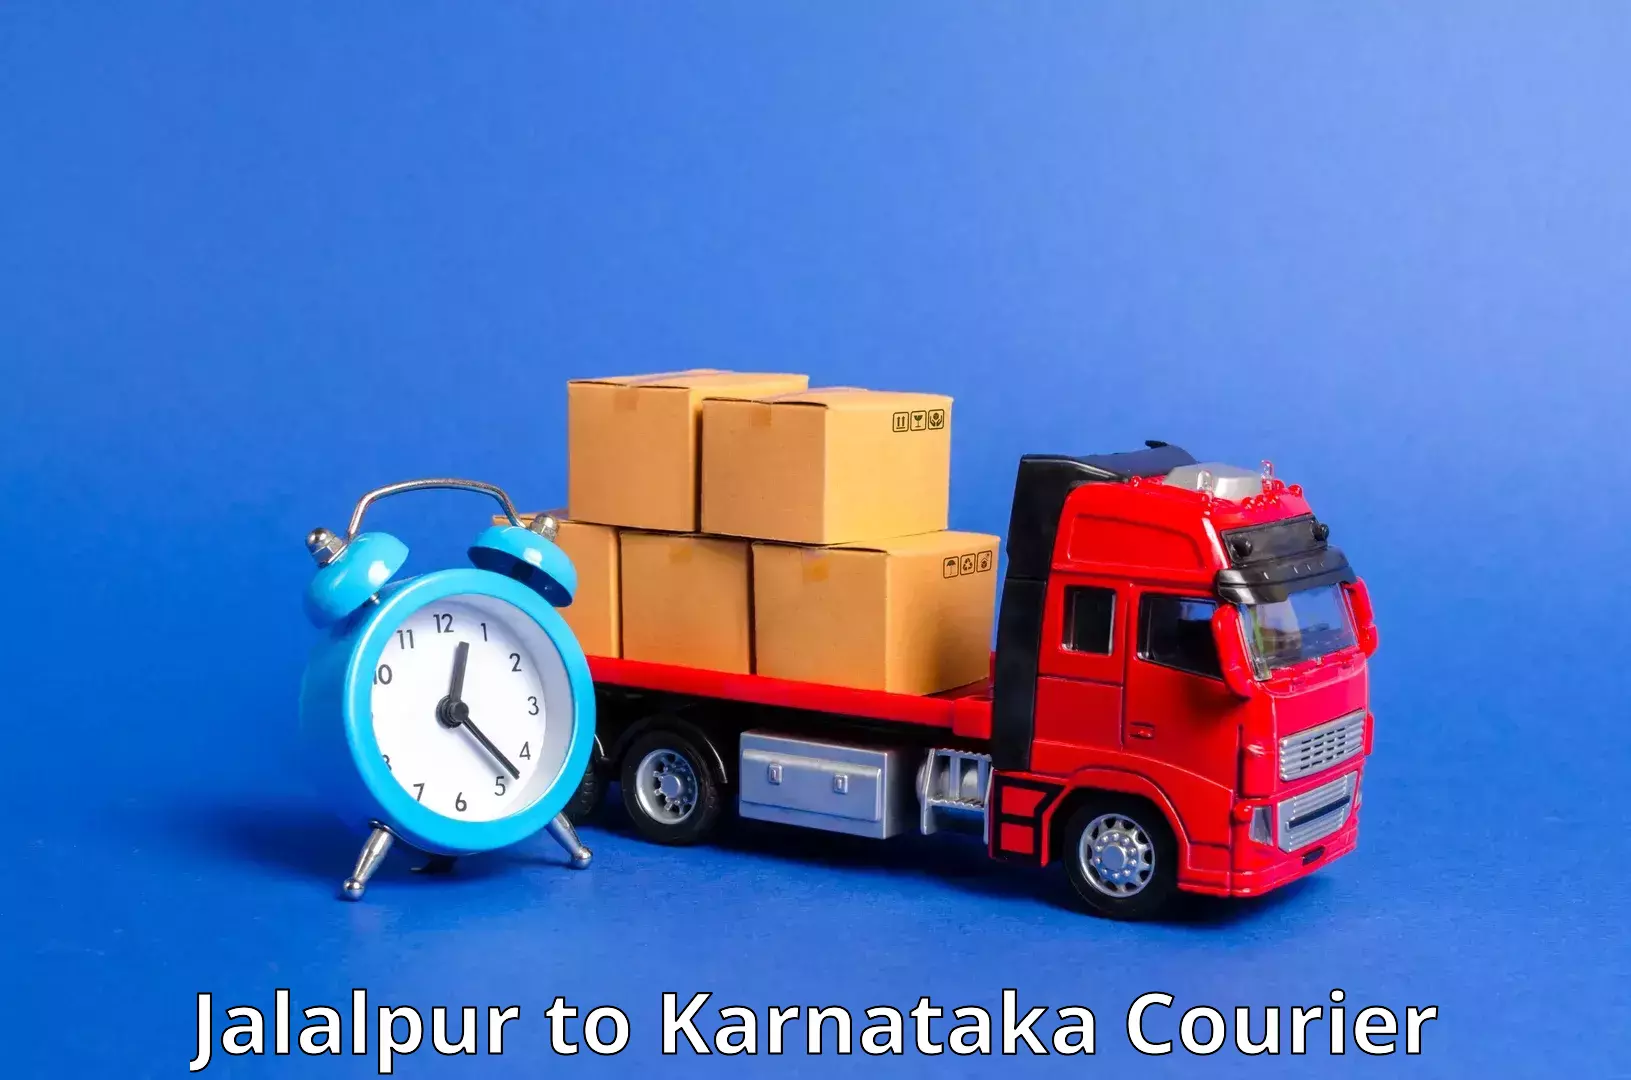 Express delivery capabilities Jalalpur to Karnataka